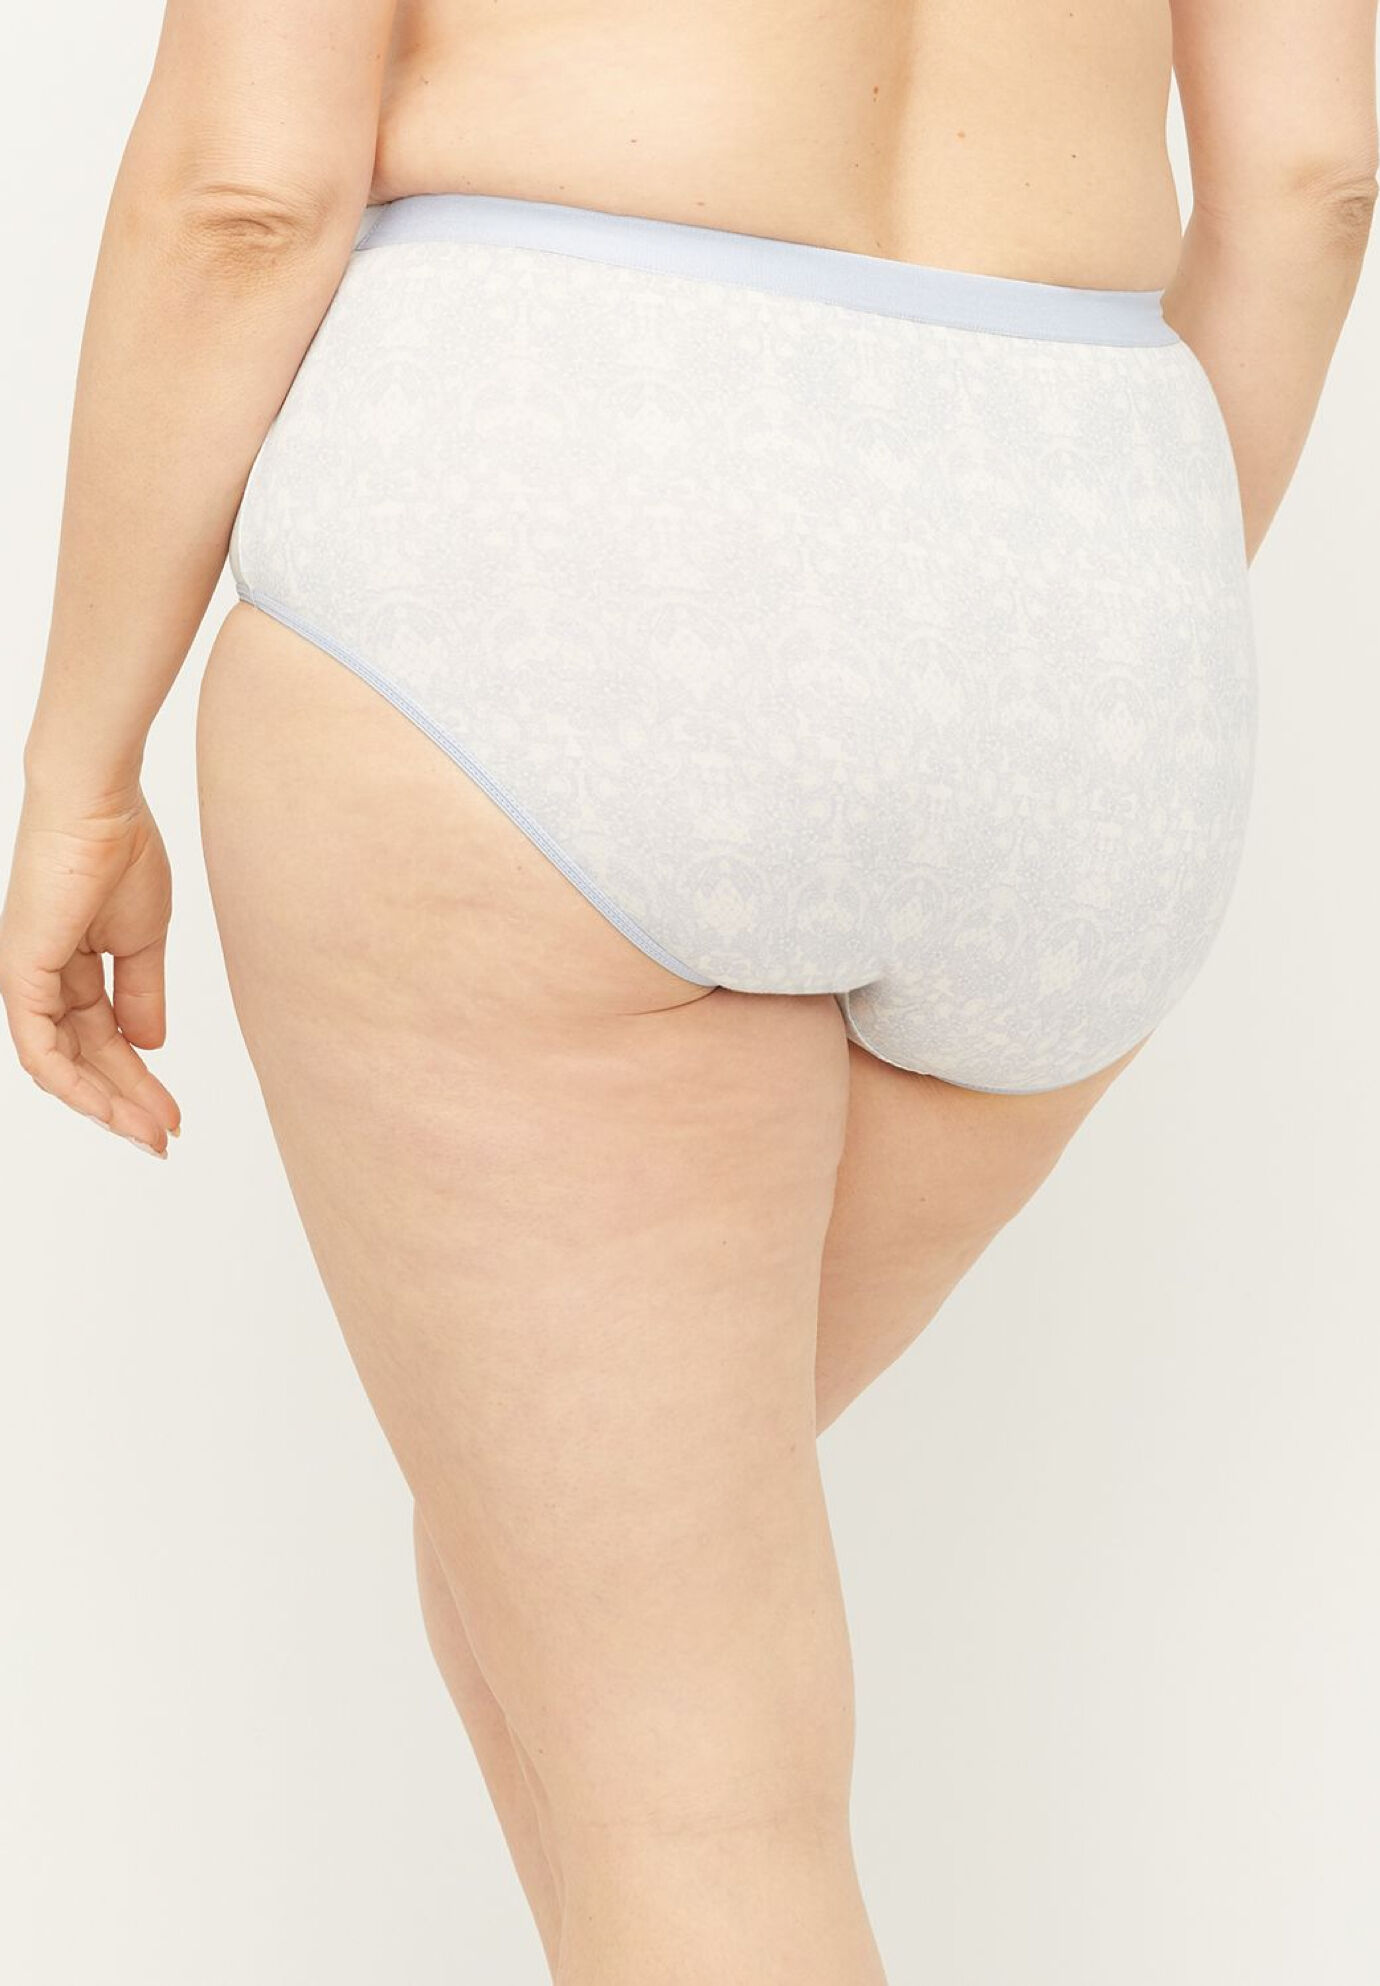 Catherines Full Brief Panties Underwear Cotton Blend White Plus Size 3X